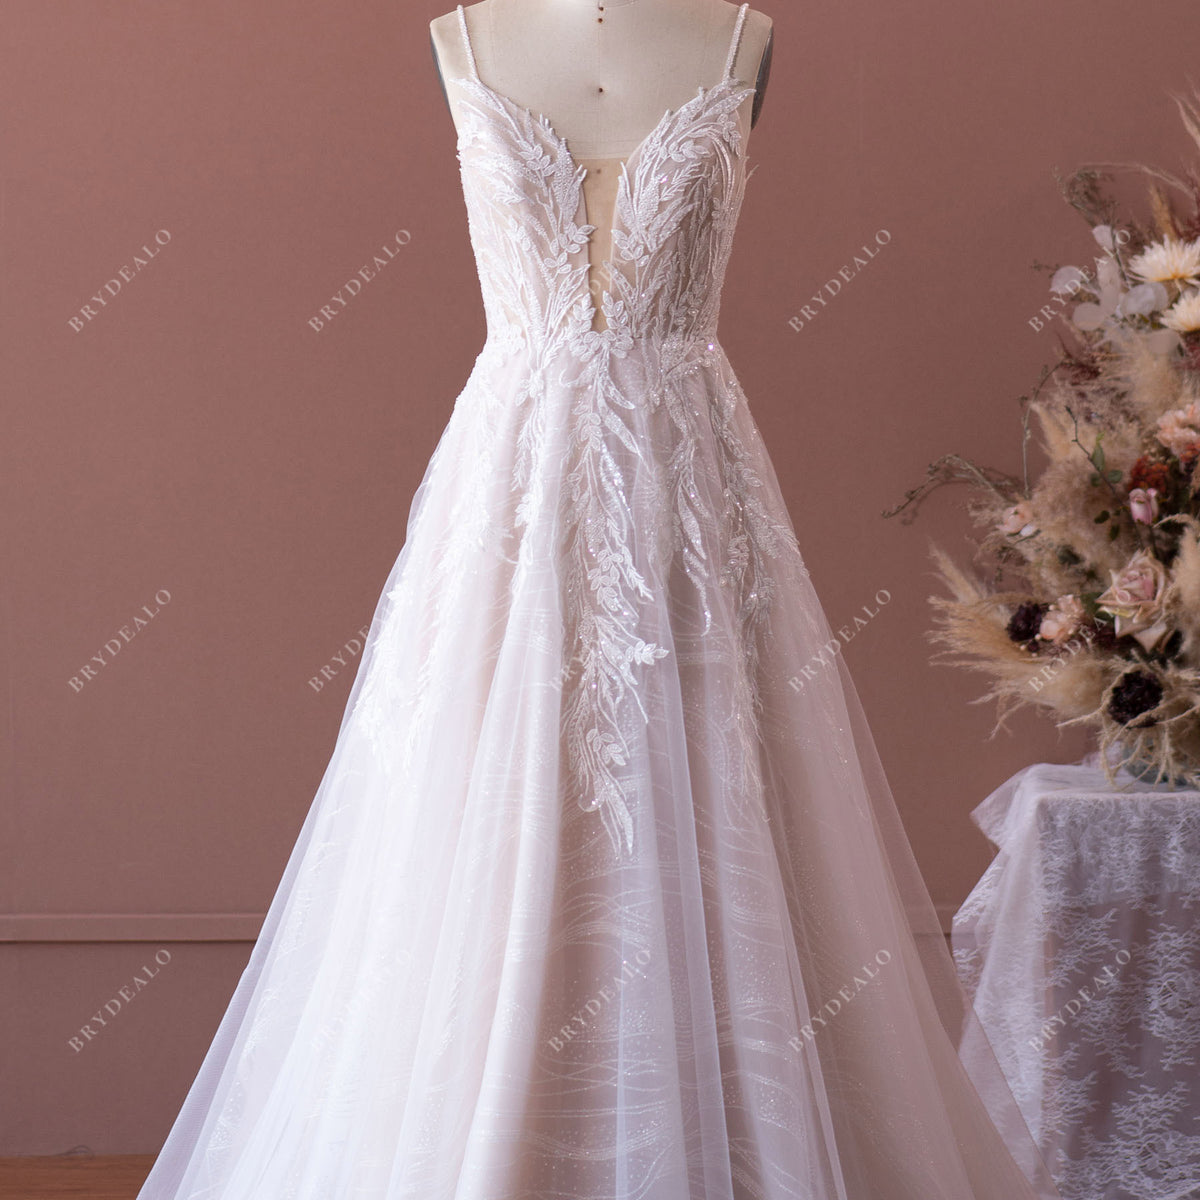 Rhinestone Rope Lace AB Metallic Sparkle Trim Lacing Dress Edging Waistline  Neckline Crystal Ribbon WEDDING Bridal Decoration Embellishment 